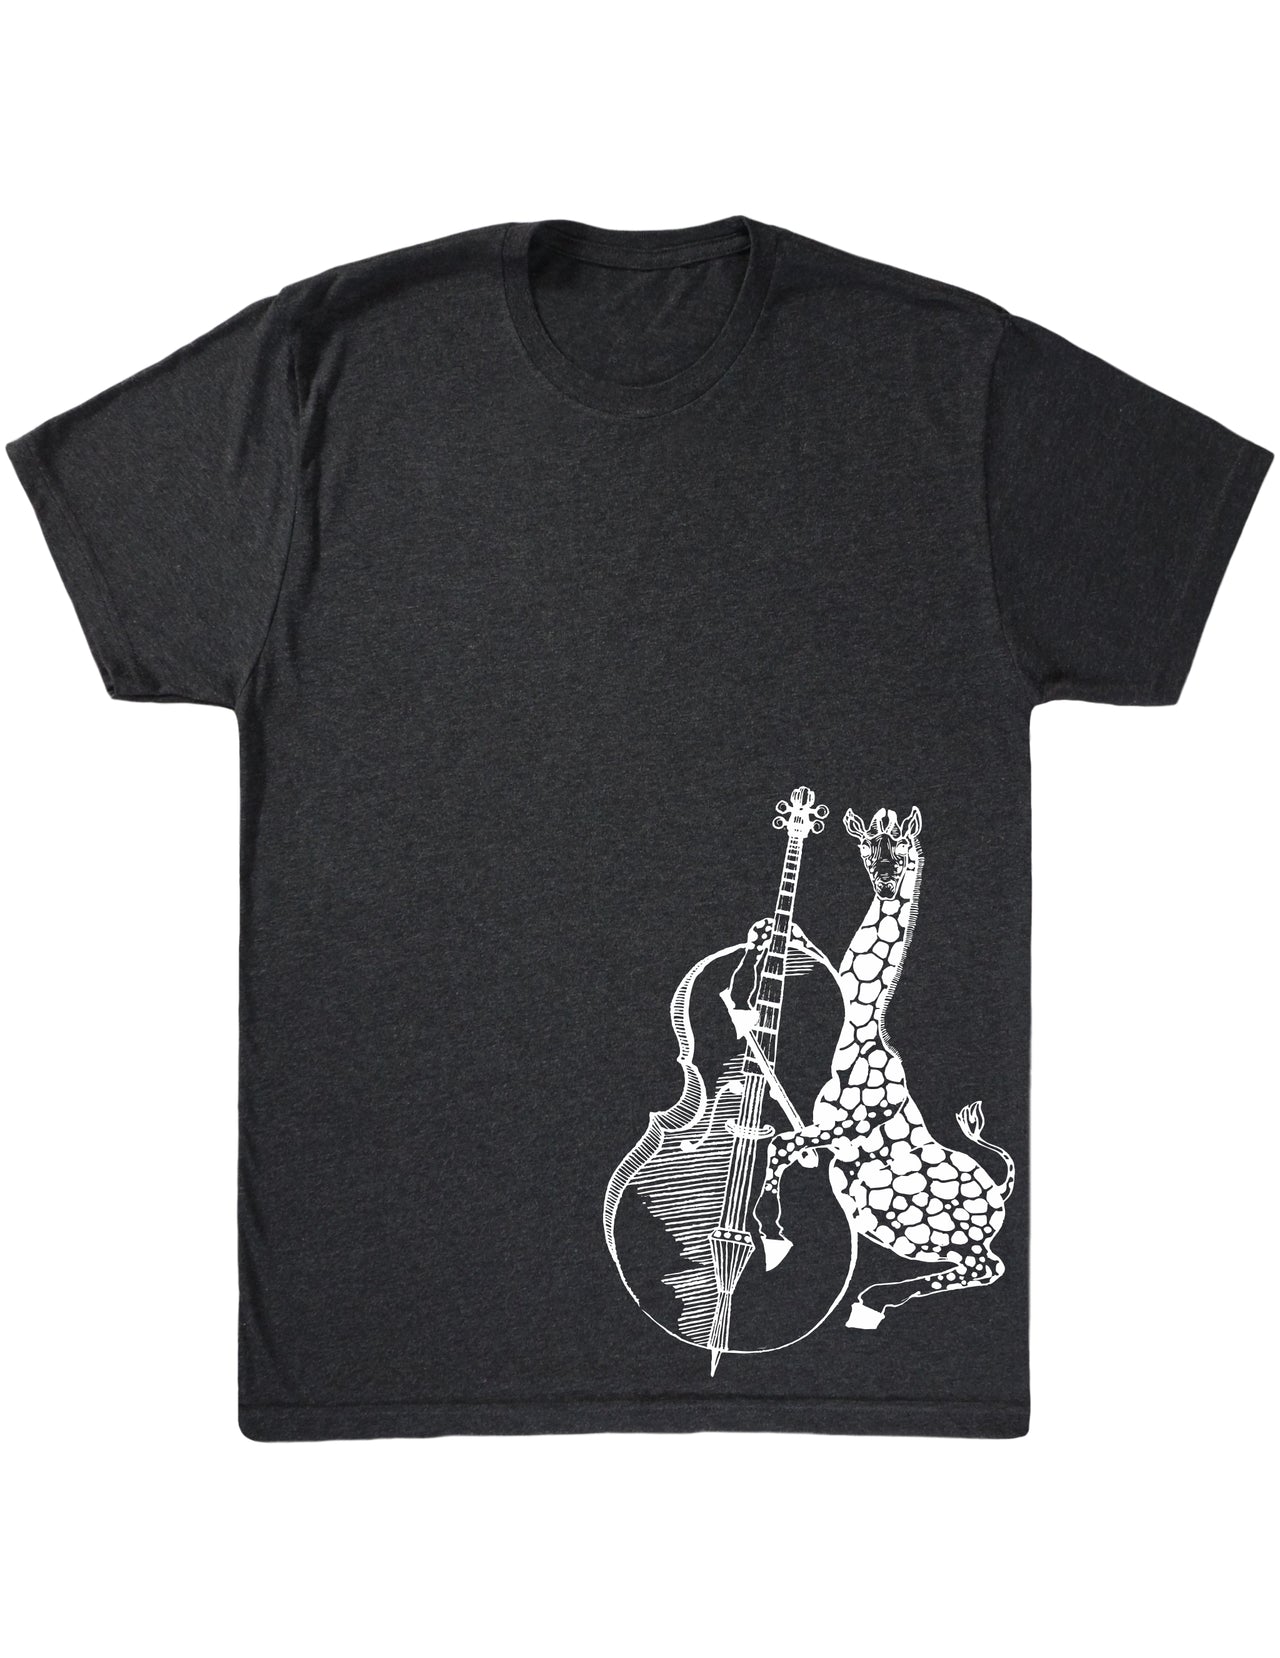 seembo-giraffe-playing-cello-cellist-musician-music-lover-vintage-black-t-shirt